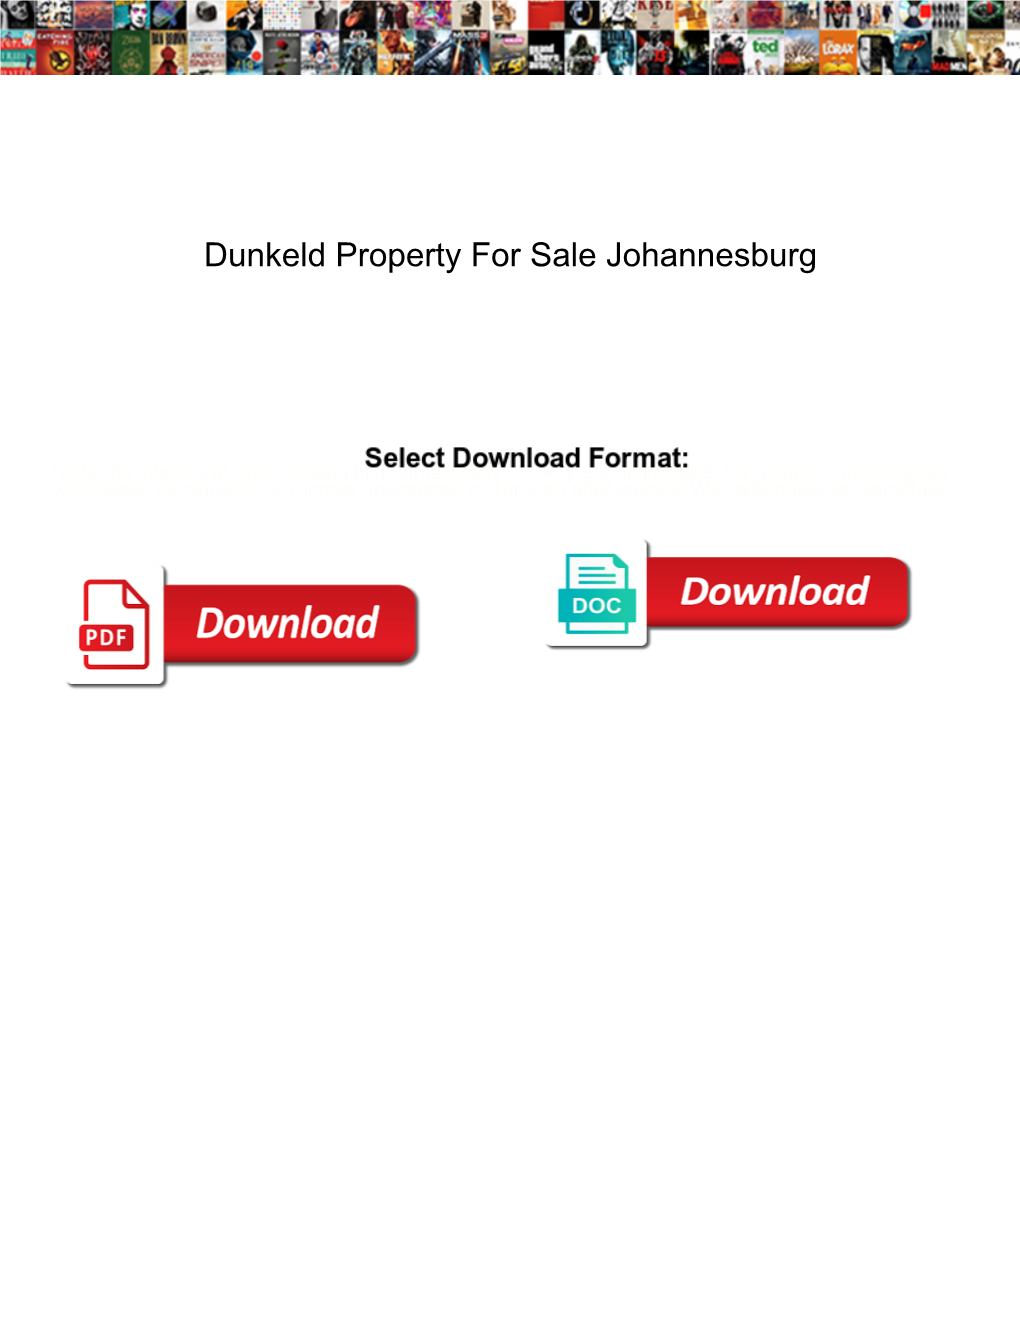 Dunkeld Property for Sale Johannesburg